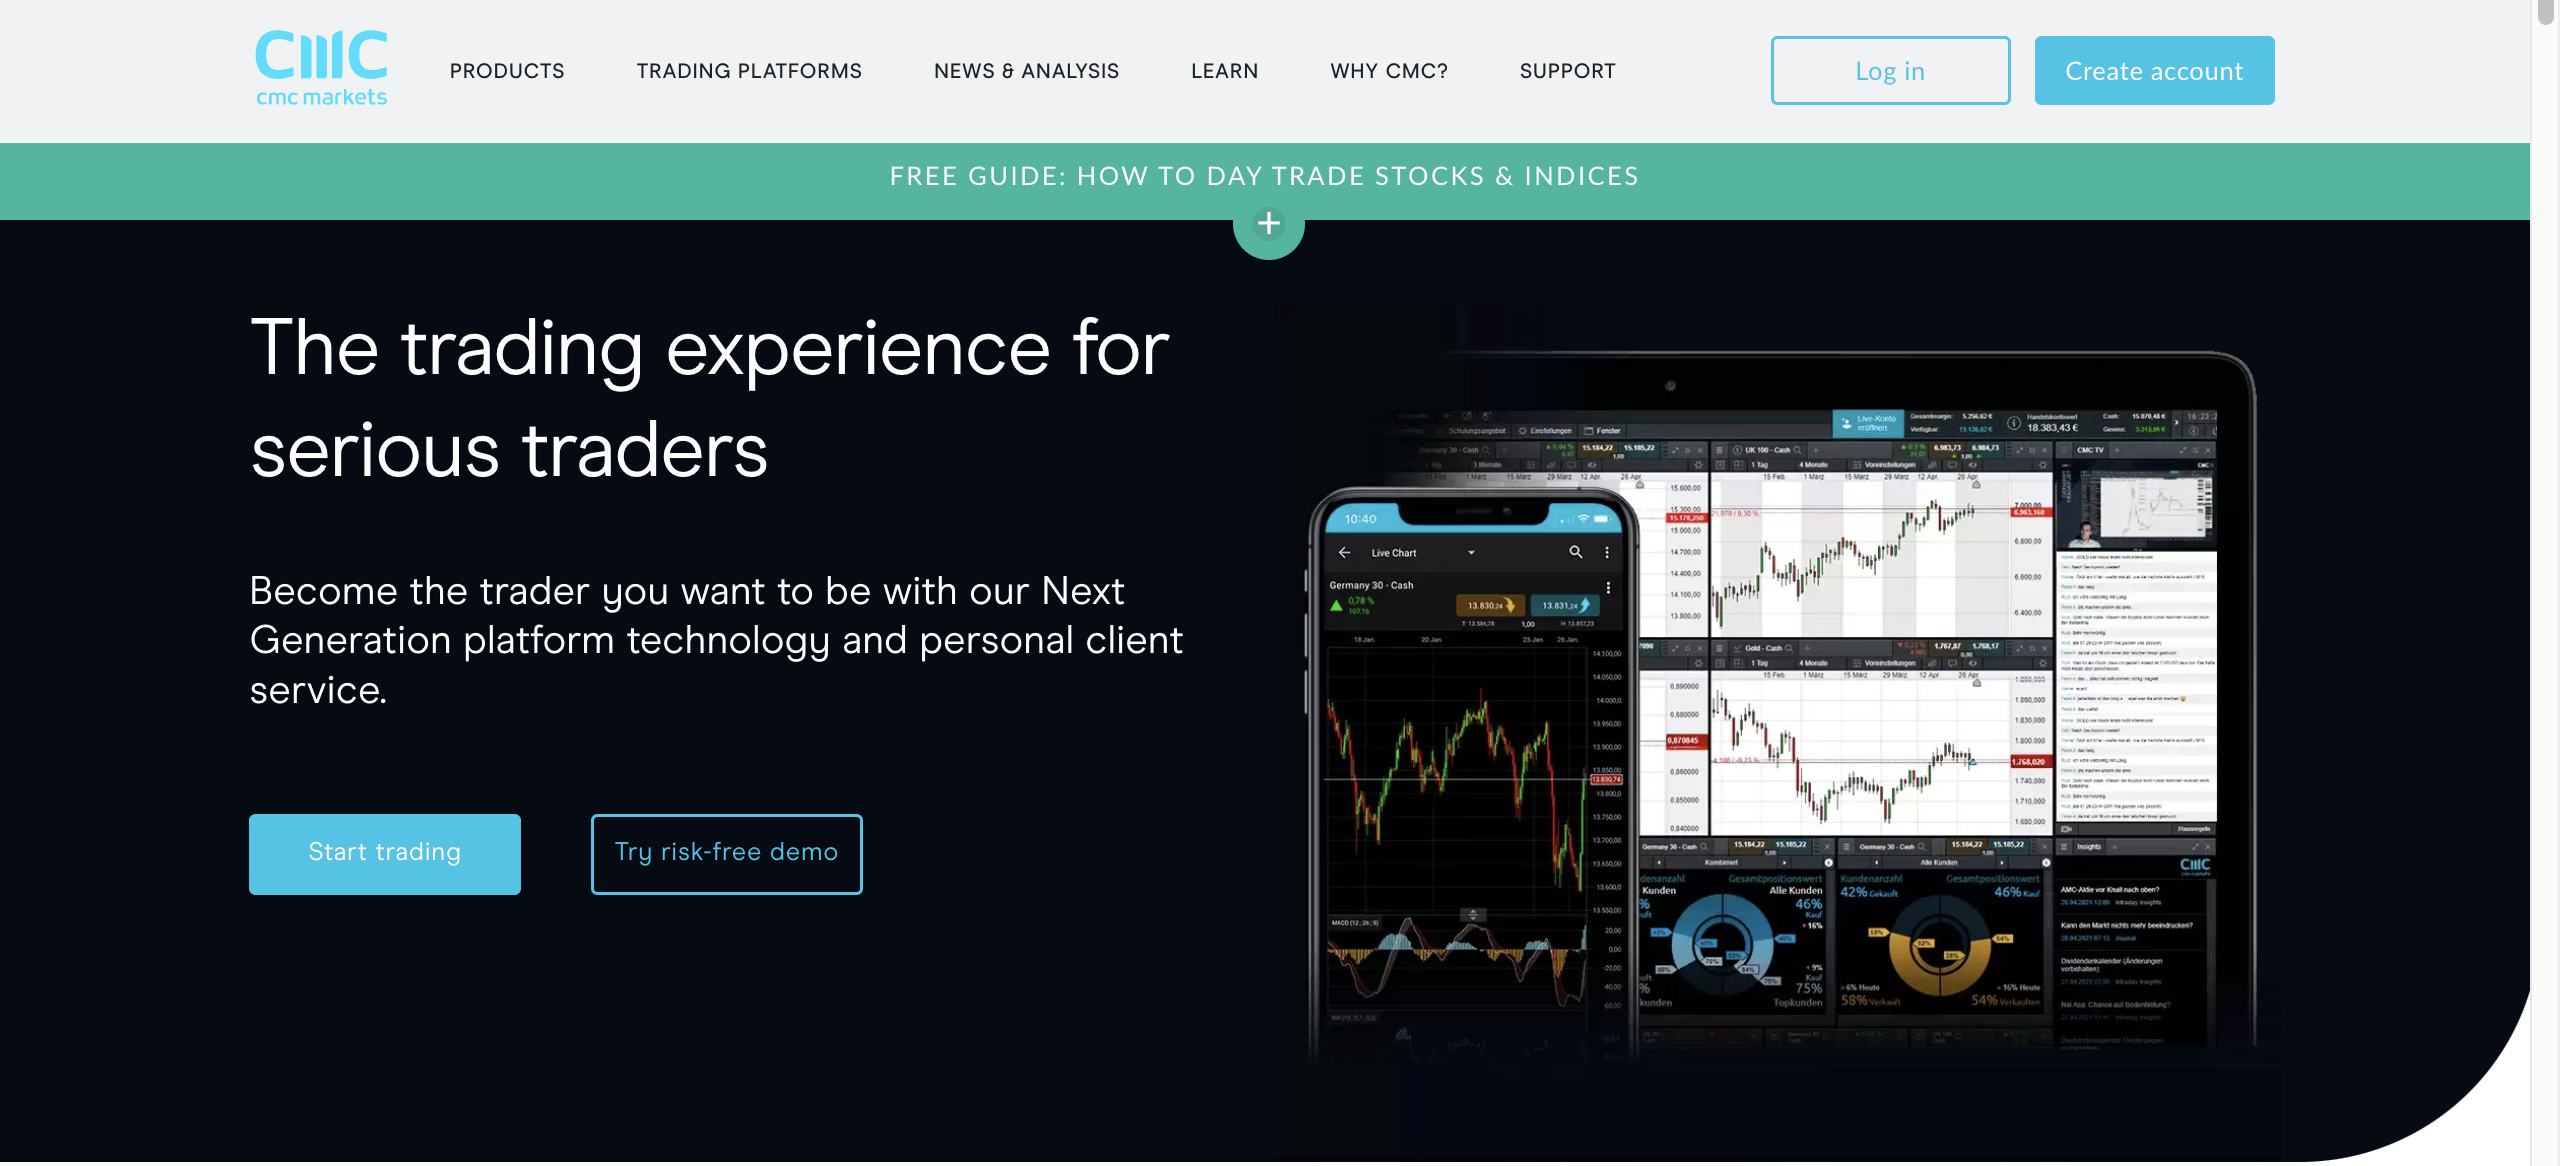 CMC Markets Homepage